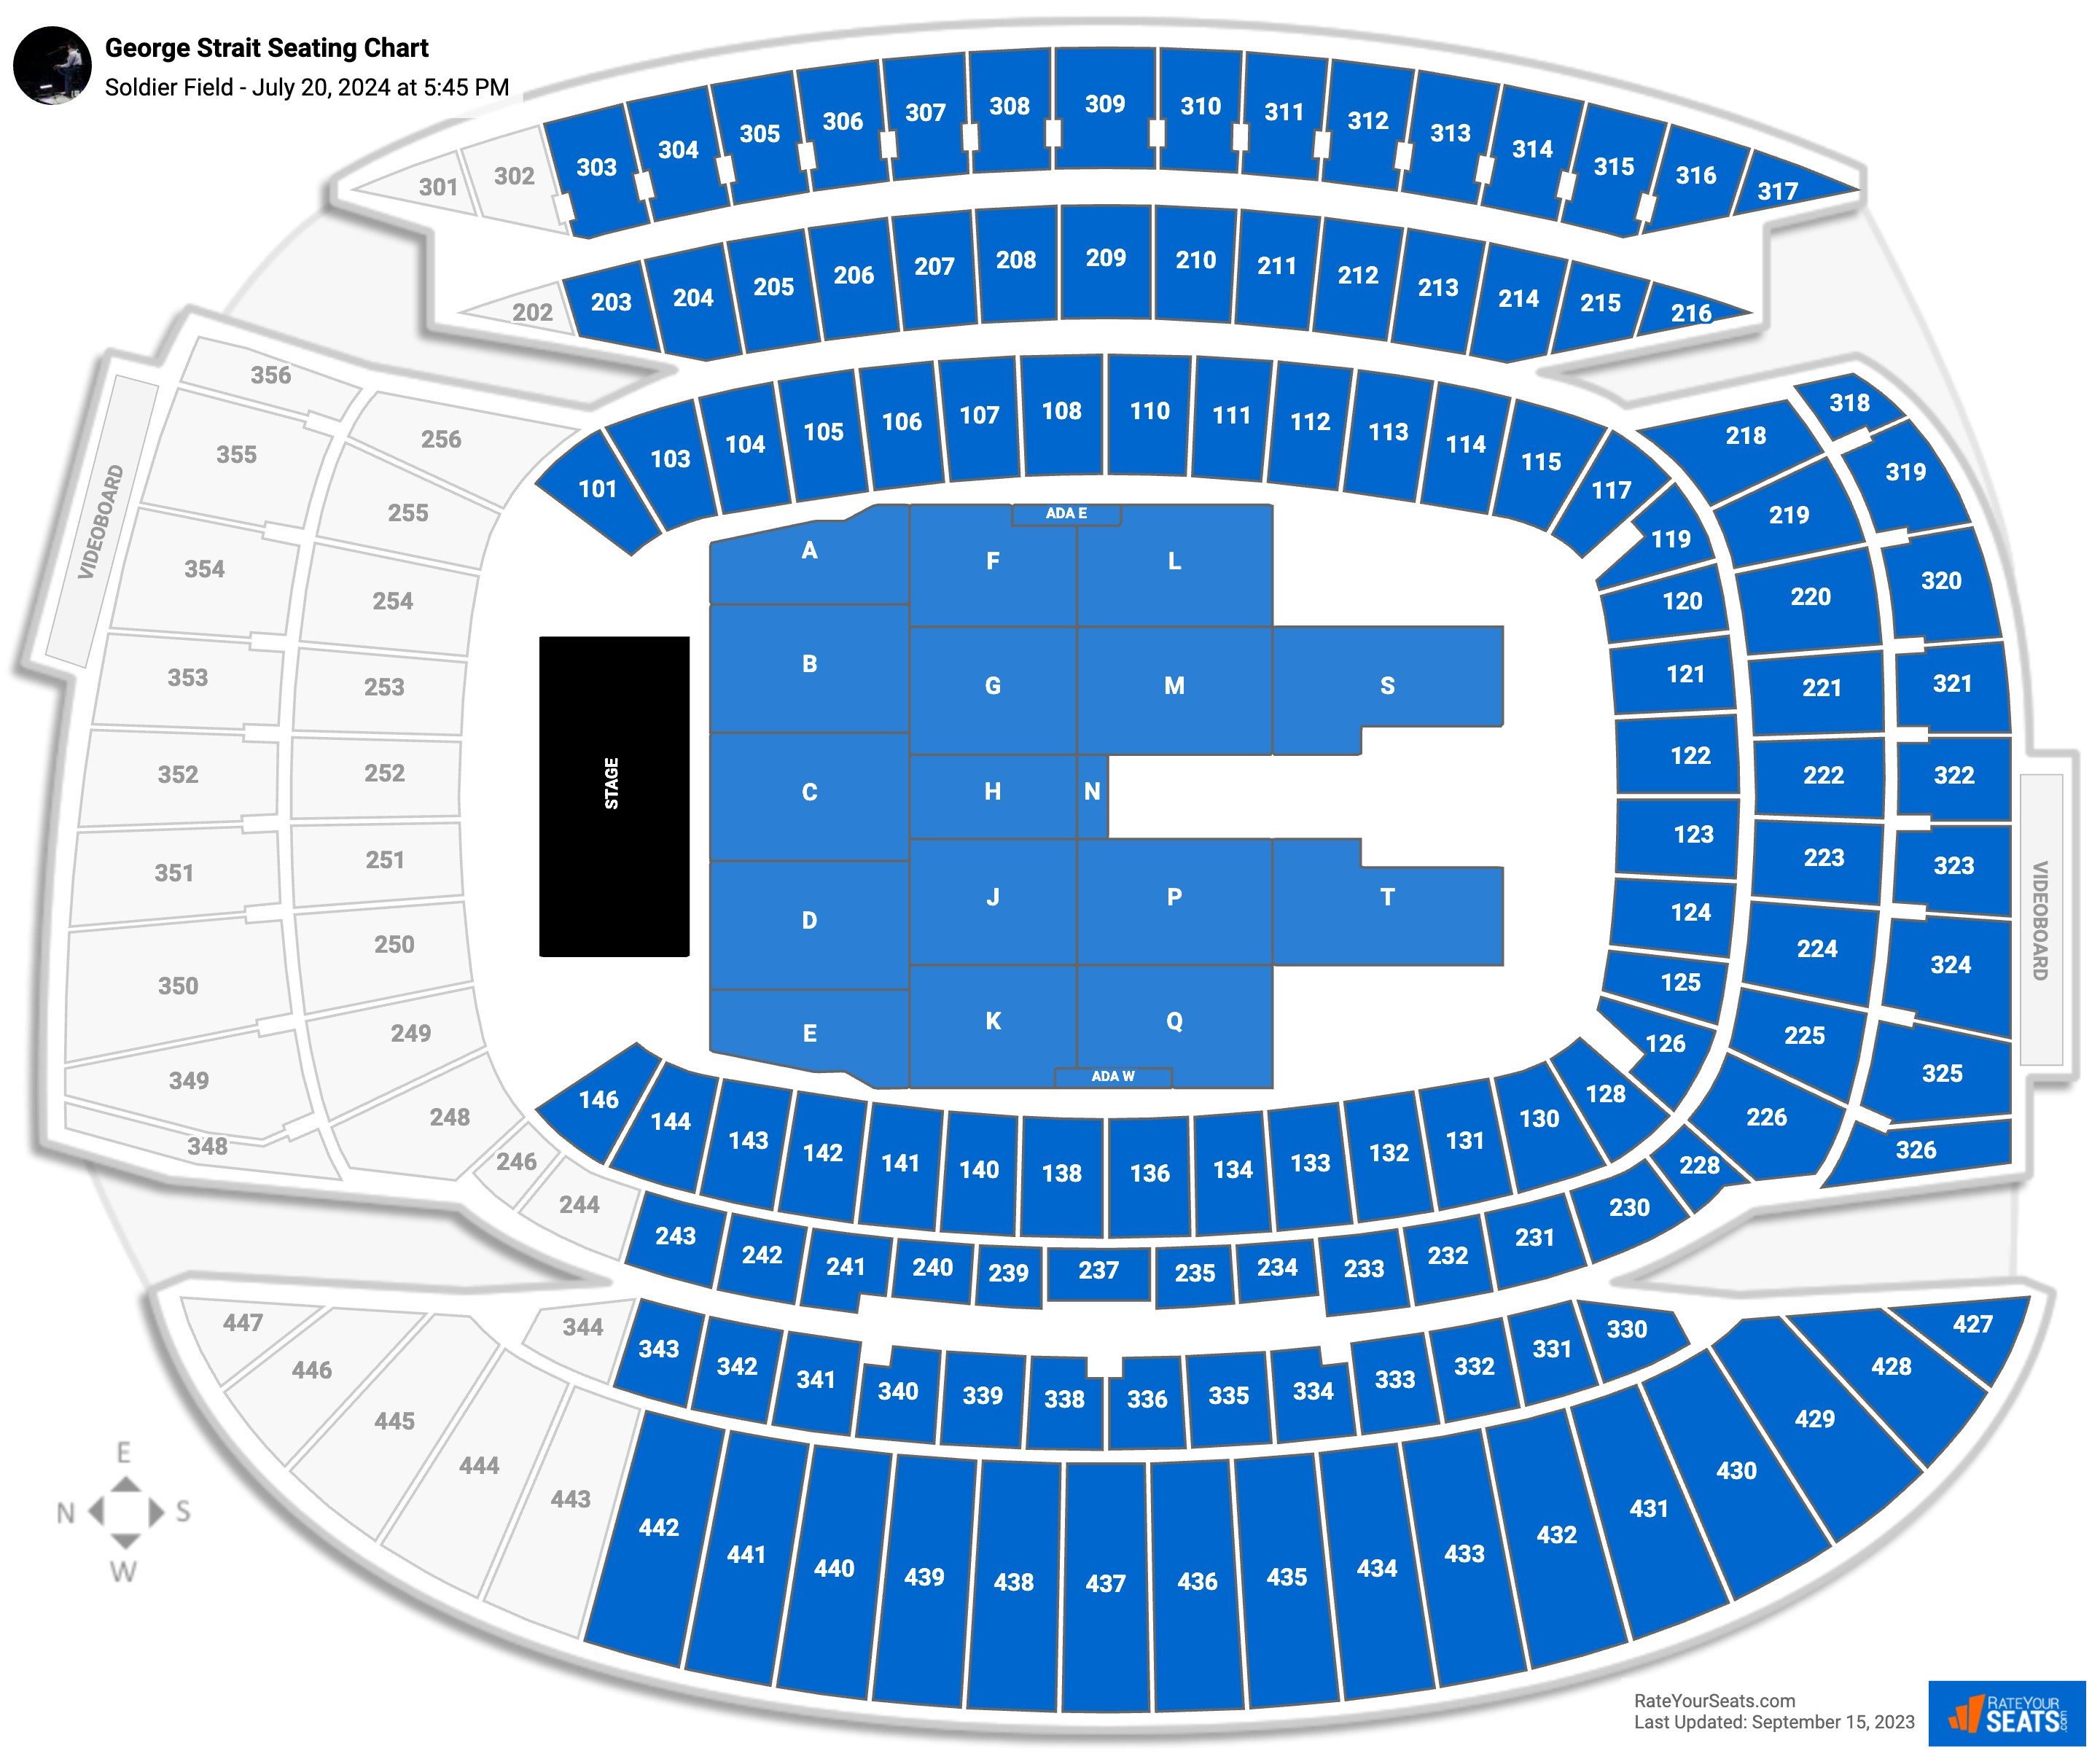 Soldier Field Concert Seating Chart - RateYourSeats.com